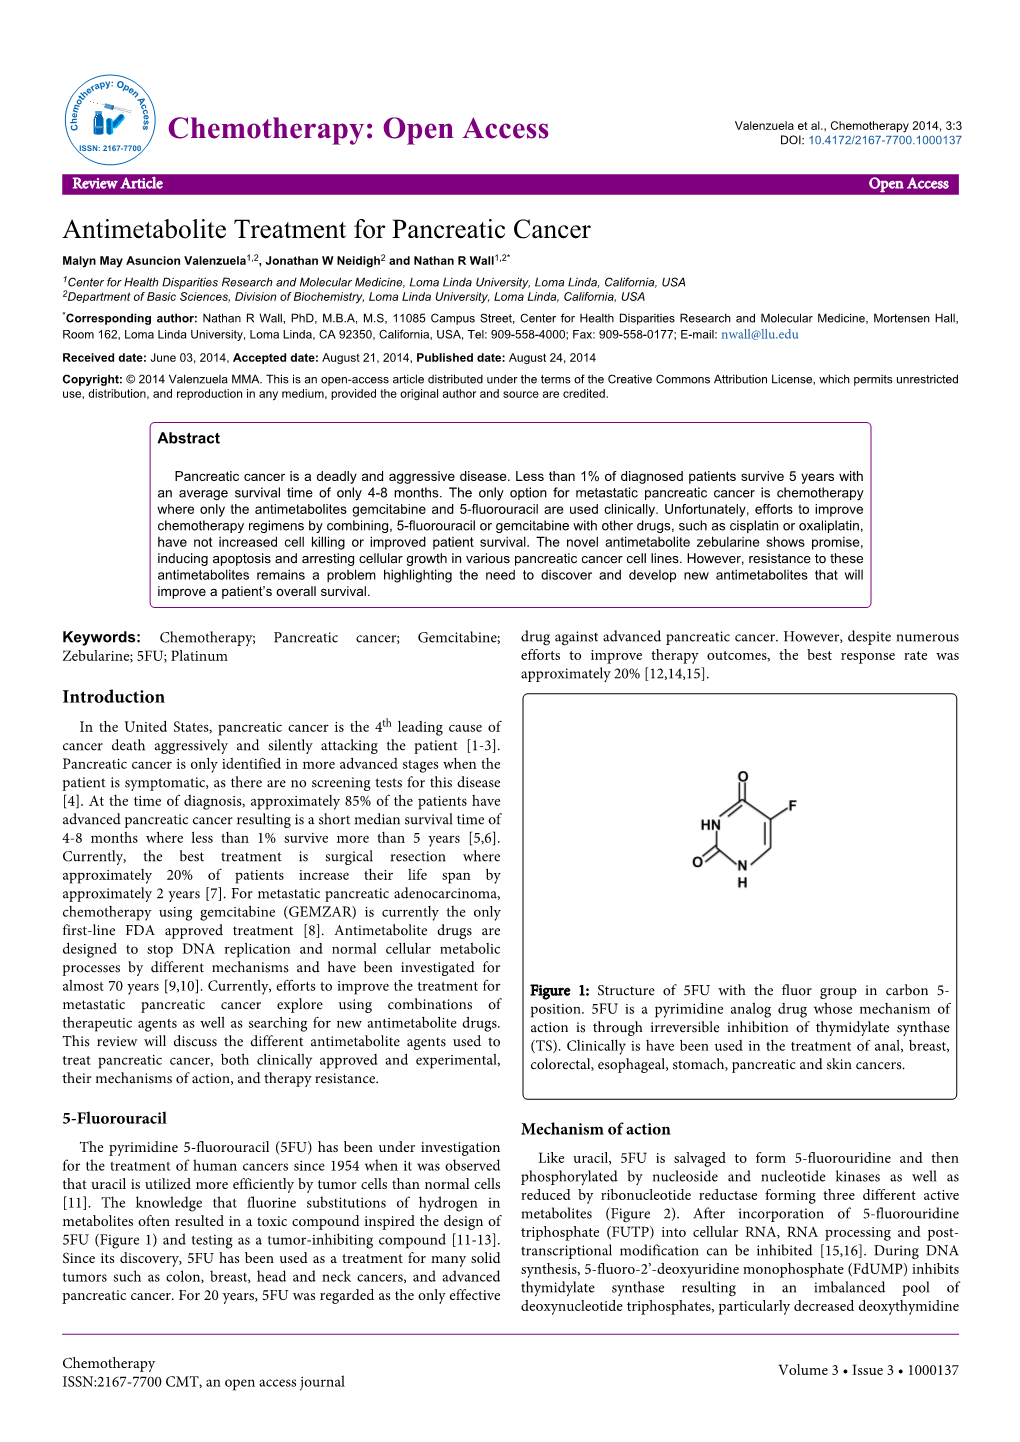 Antimetabolite Treatment for Pancreatic Cancer